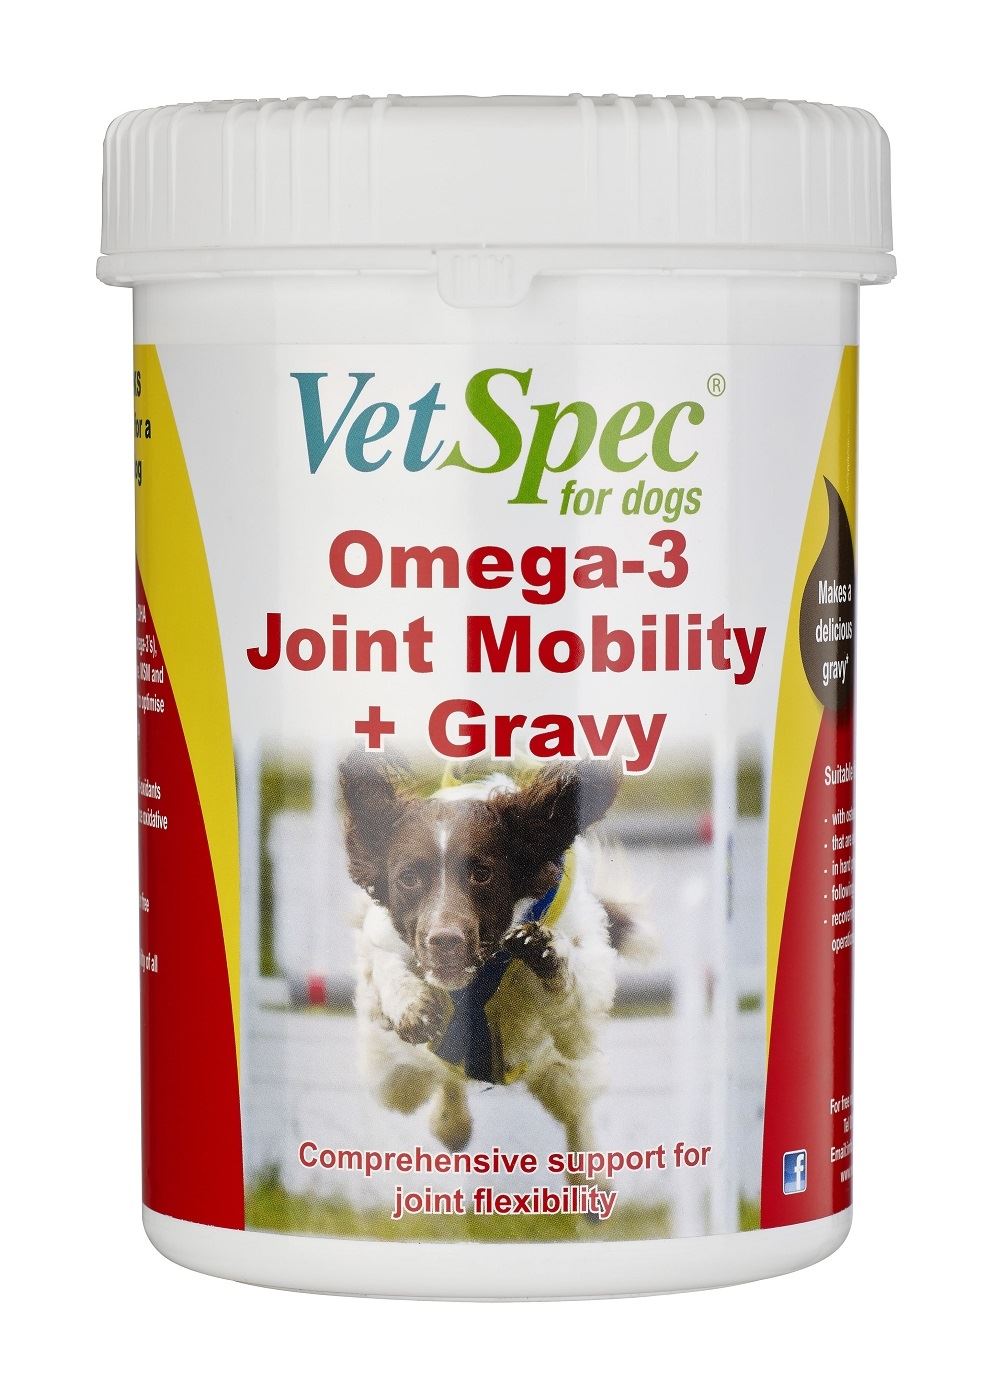 Vetspec Omega-3 Joint Mobility + Gravy - Just Horse Riders